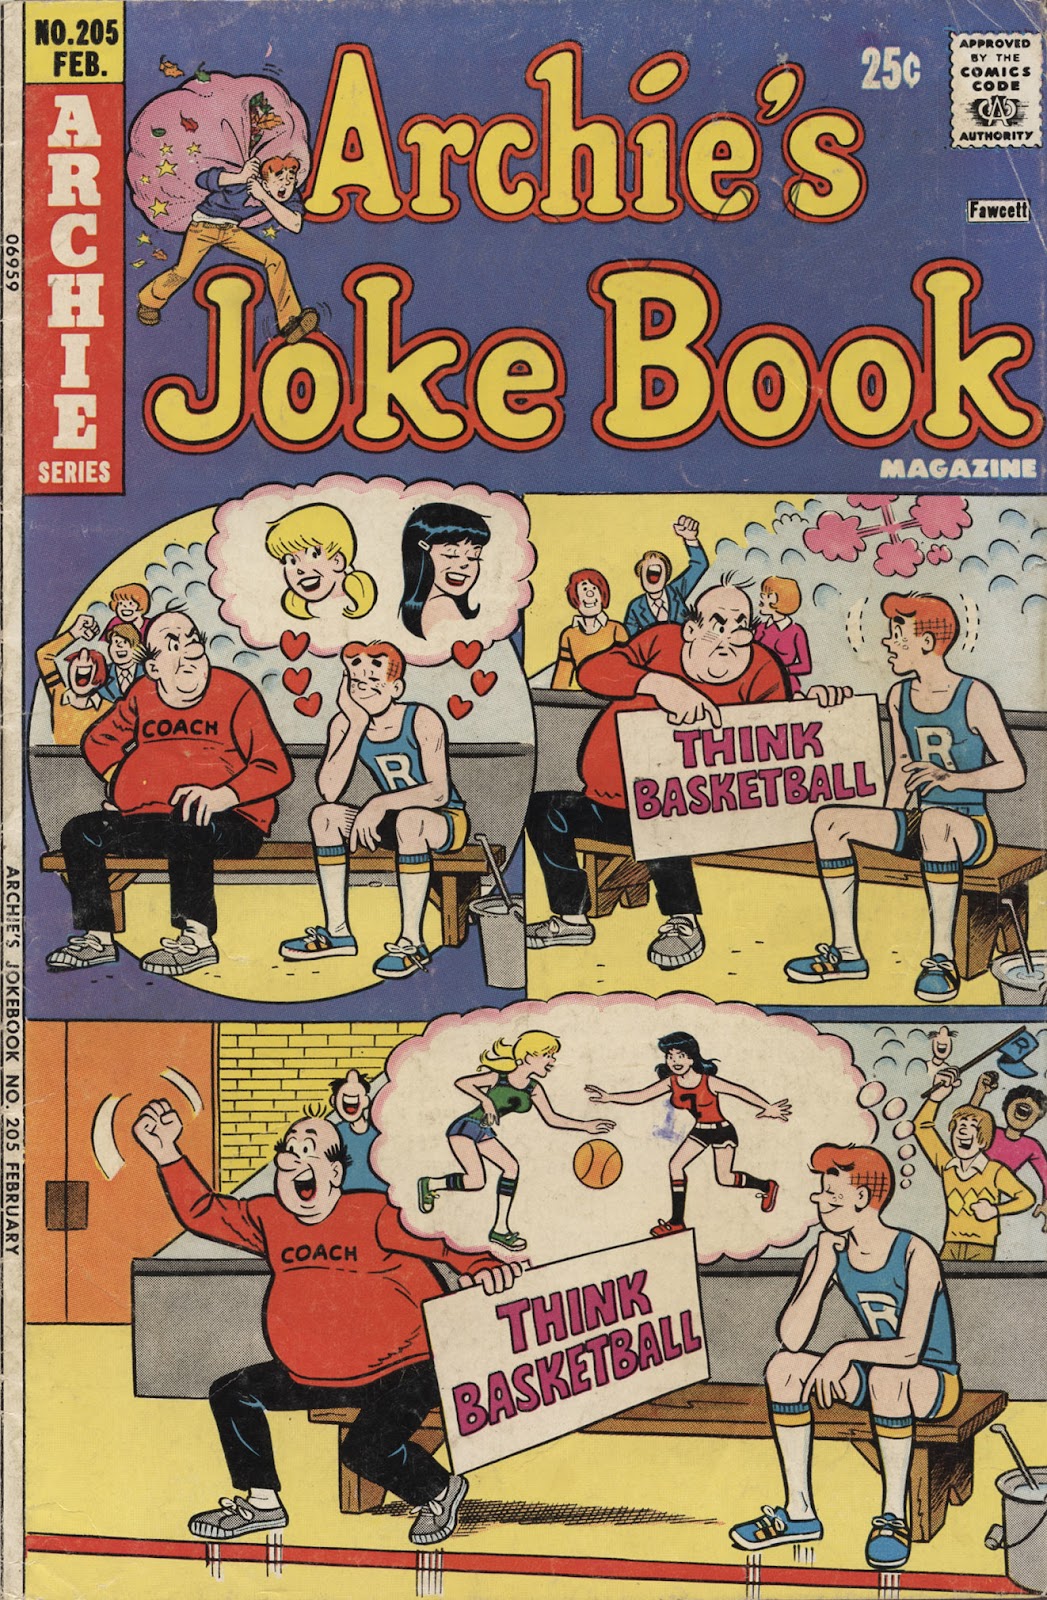 Archie's Joke Book Magazine issue 205 - Page 1